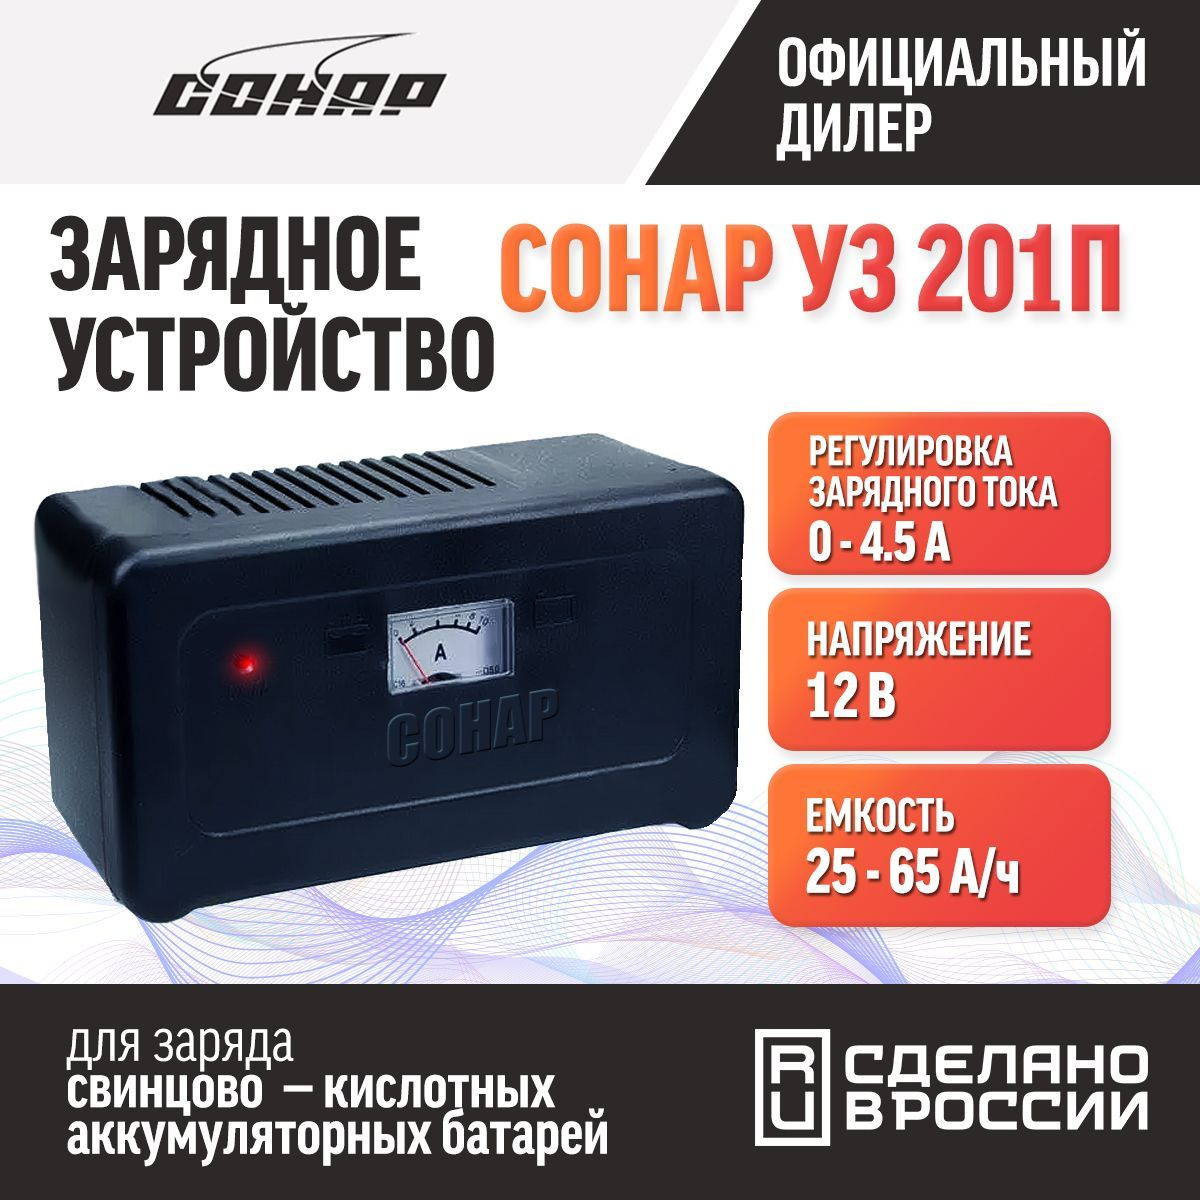 Зарядное устройство для аккумуляторов автомобиля СОНАР УЗ 201П амперметр 12В, автомат , 0-4.5А, 25-65Ач